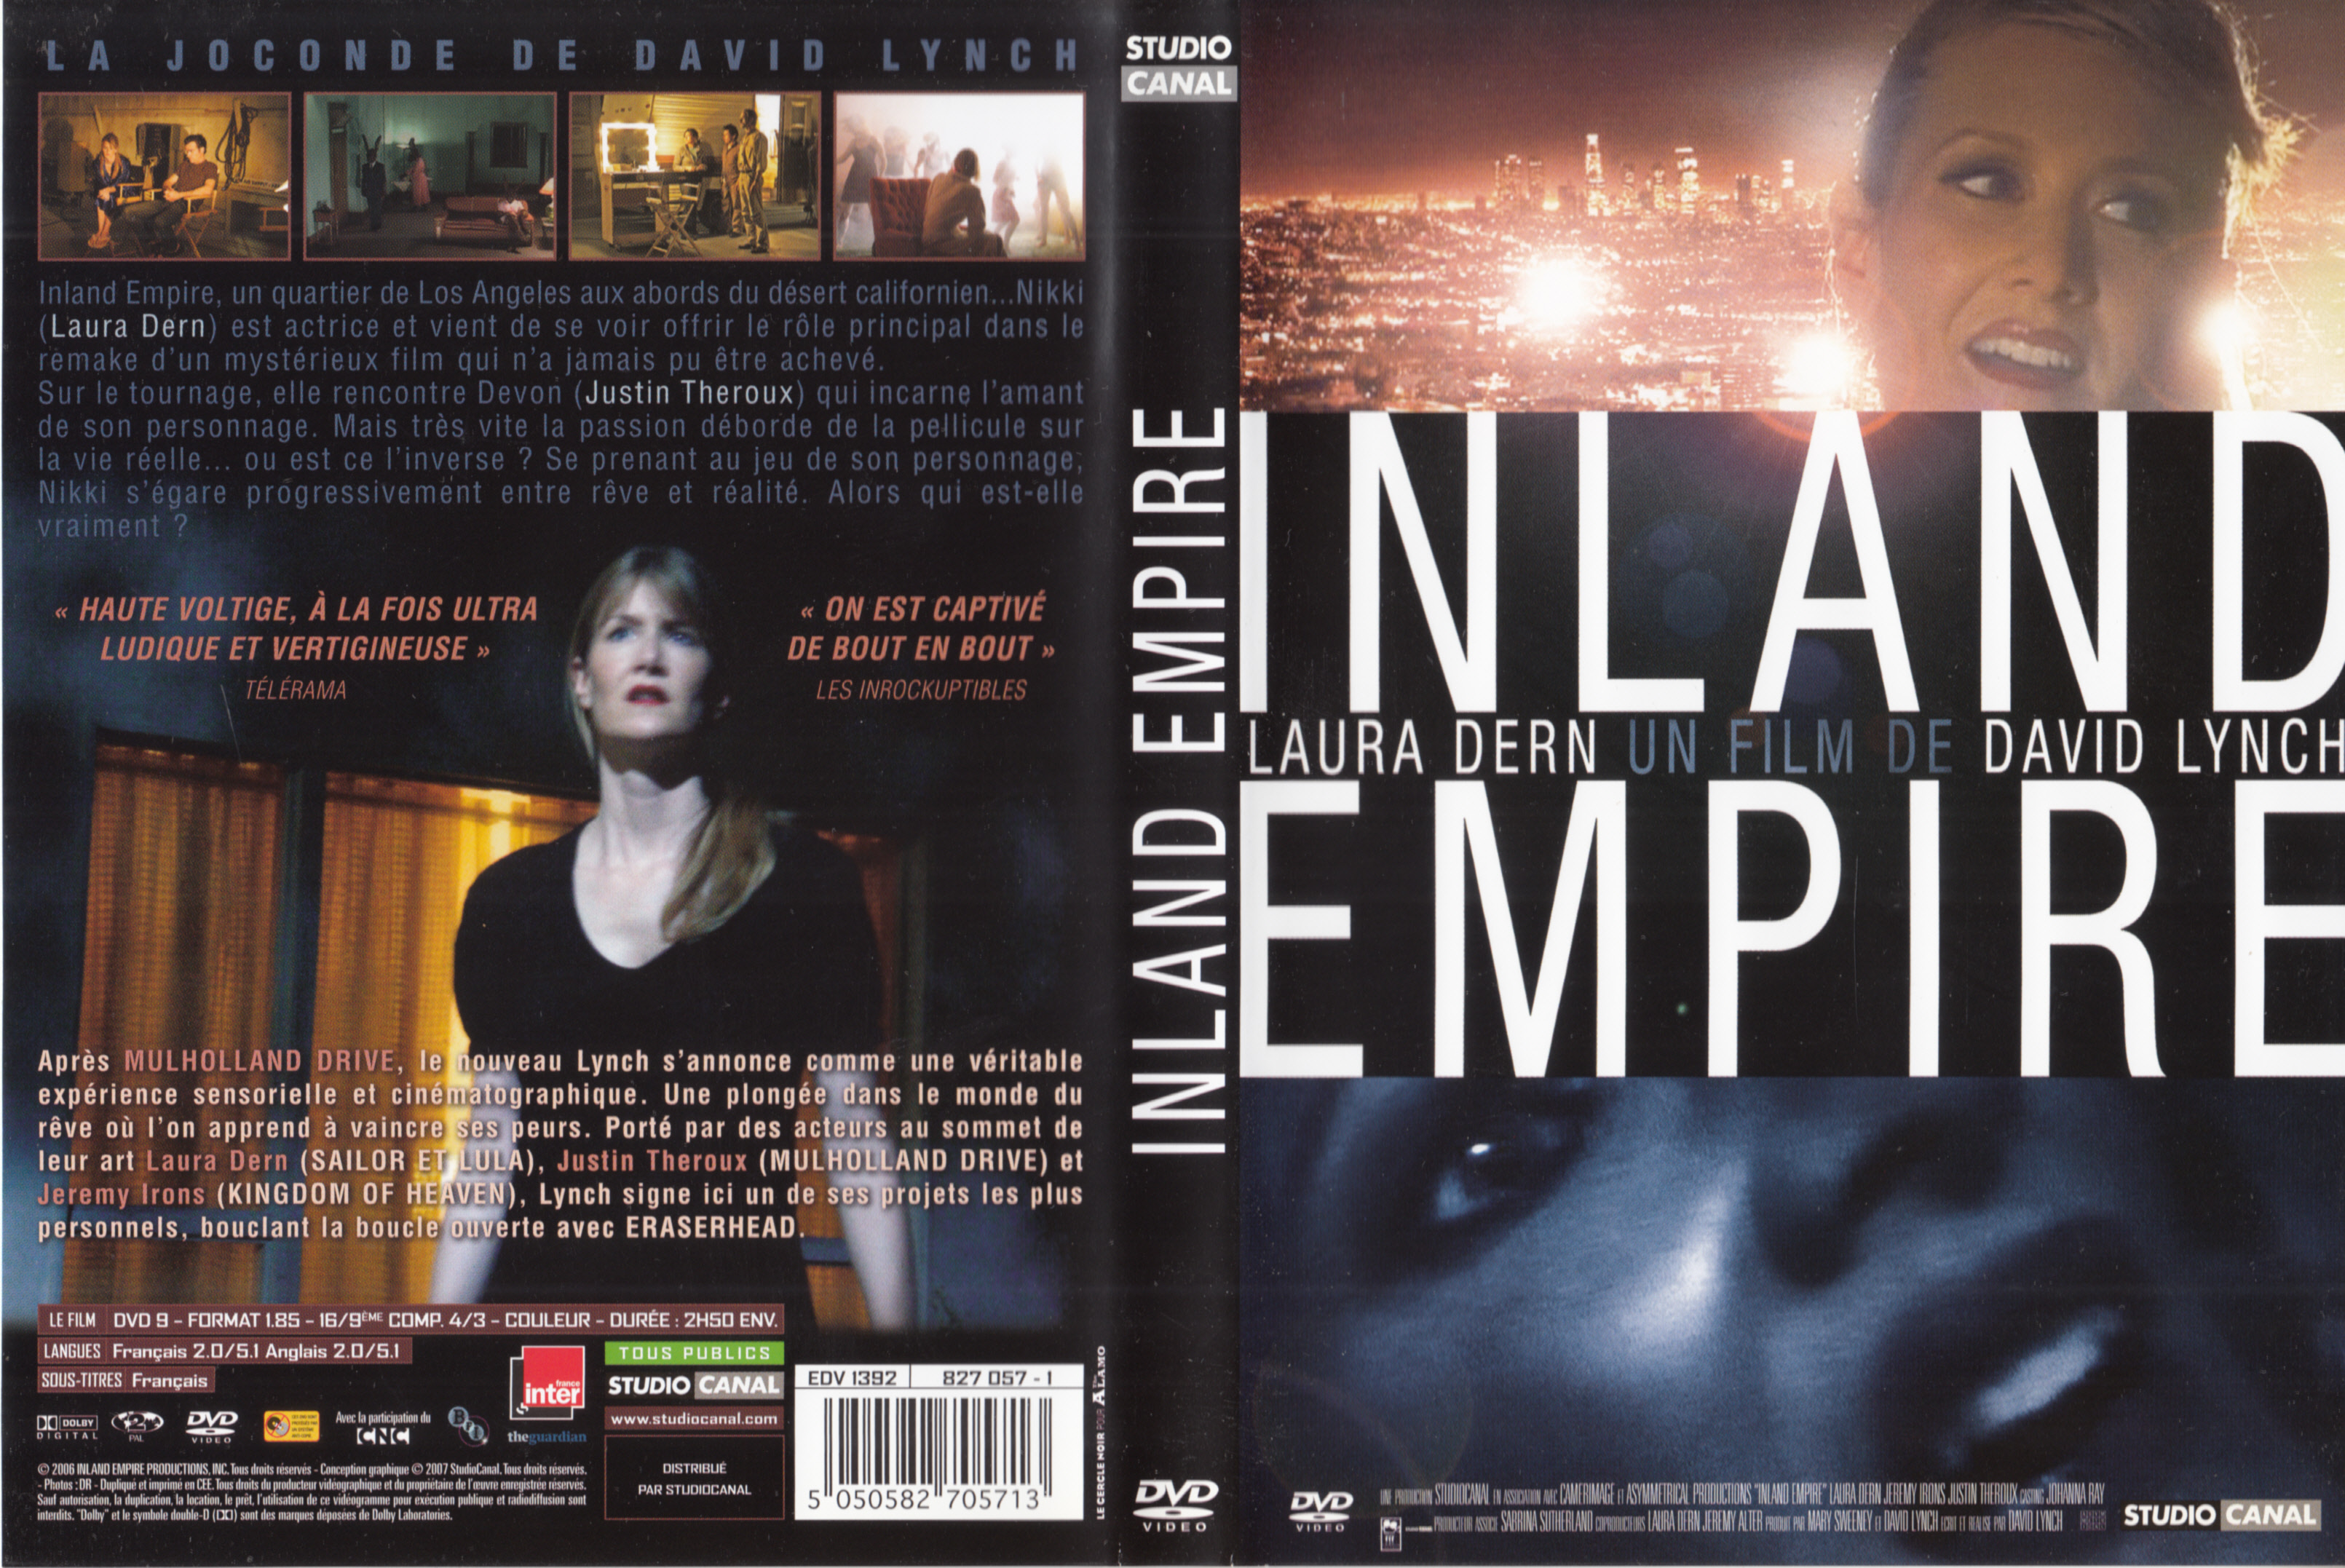 Jaquette DVD Inland Empire v2